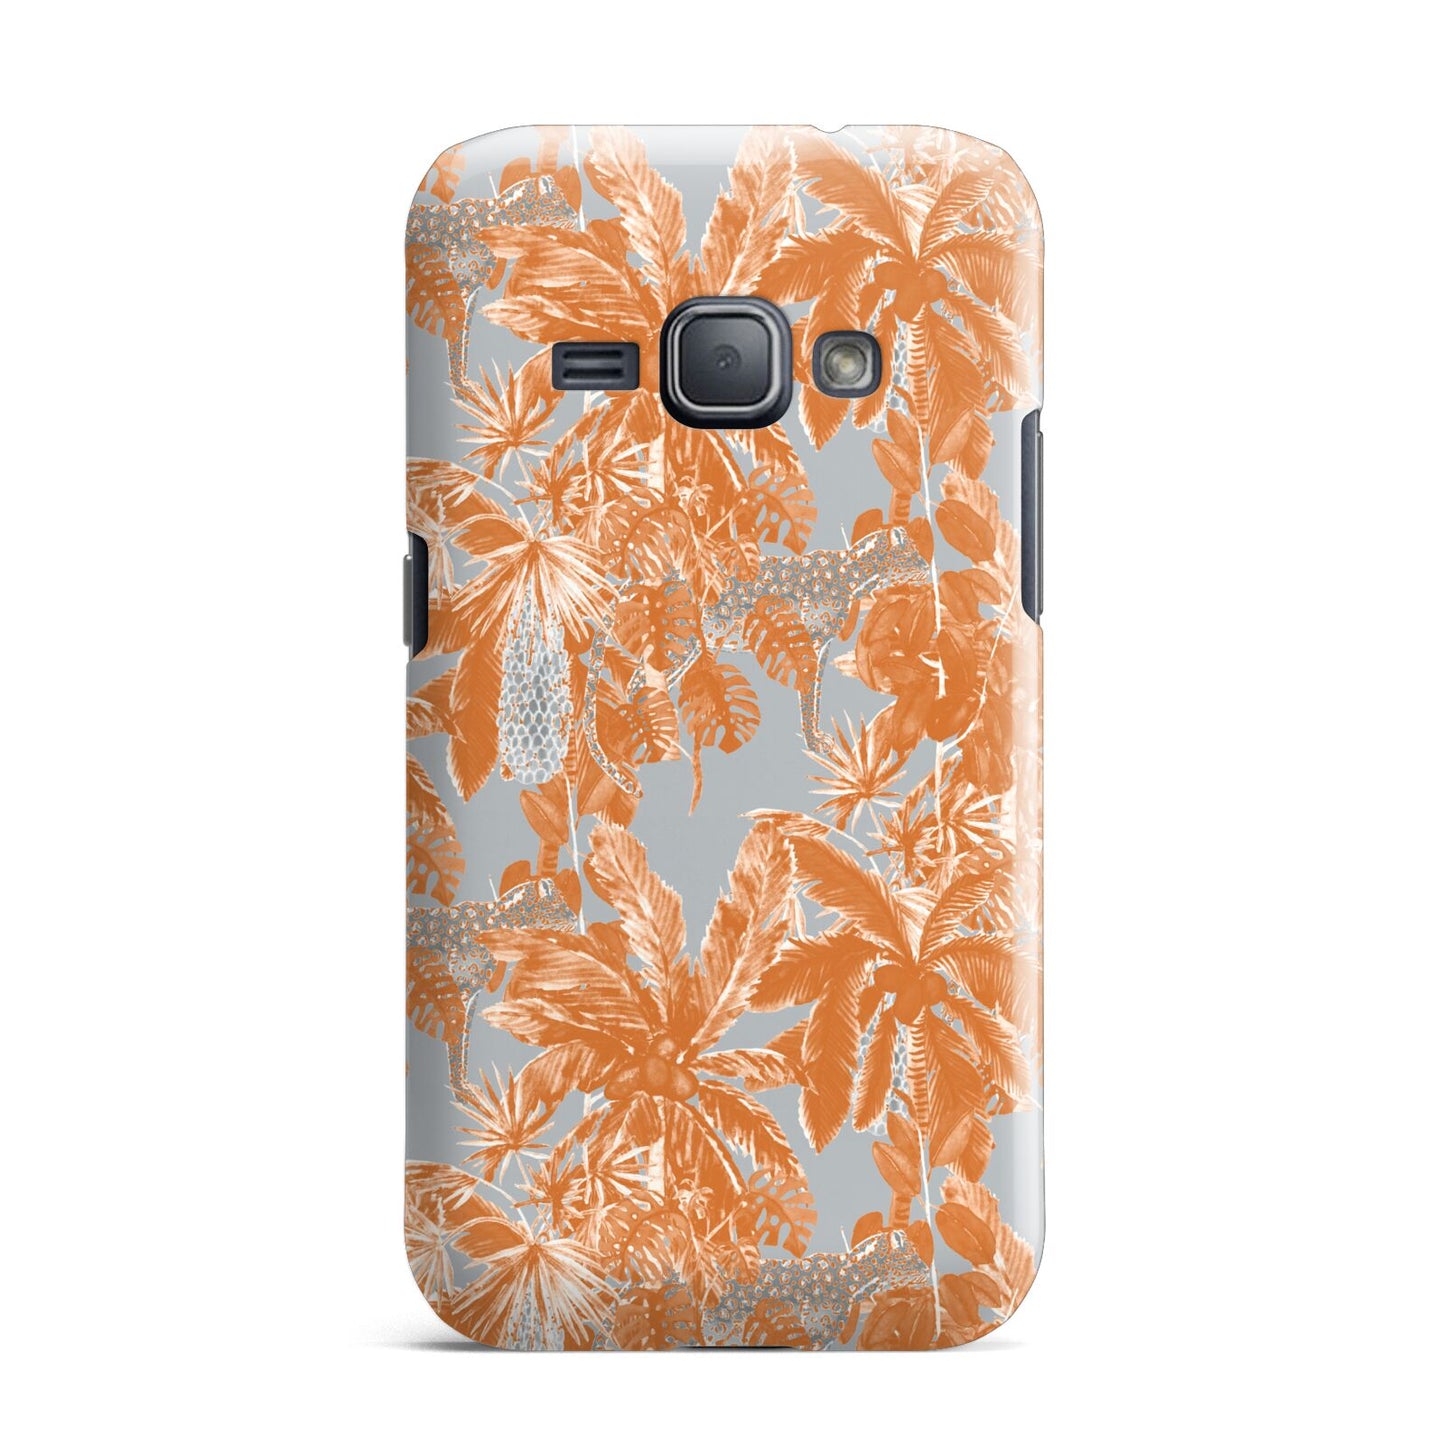 Tropical Samsung Galaxy J1 2016 Case